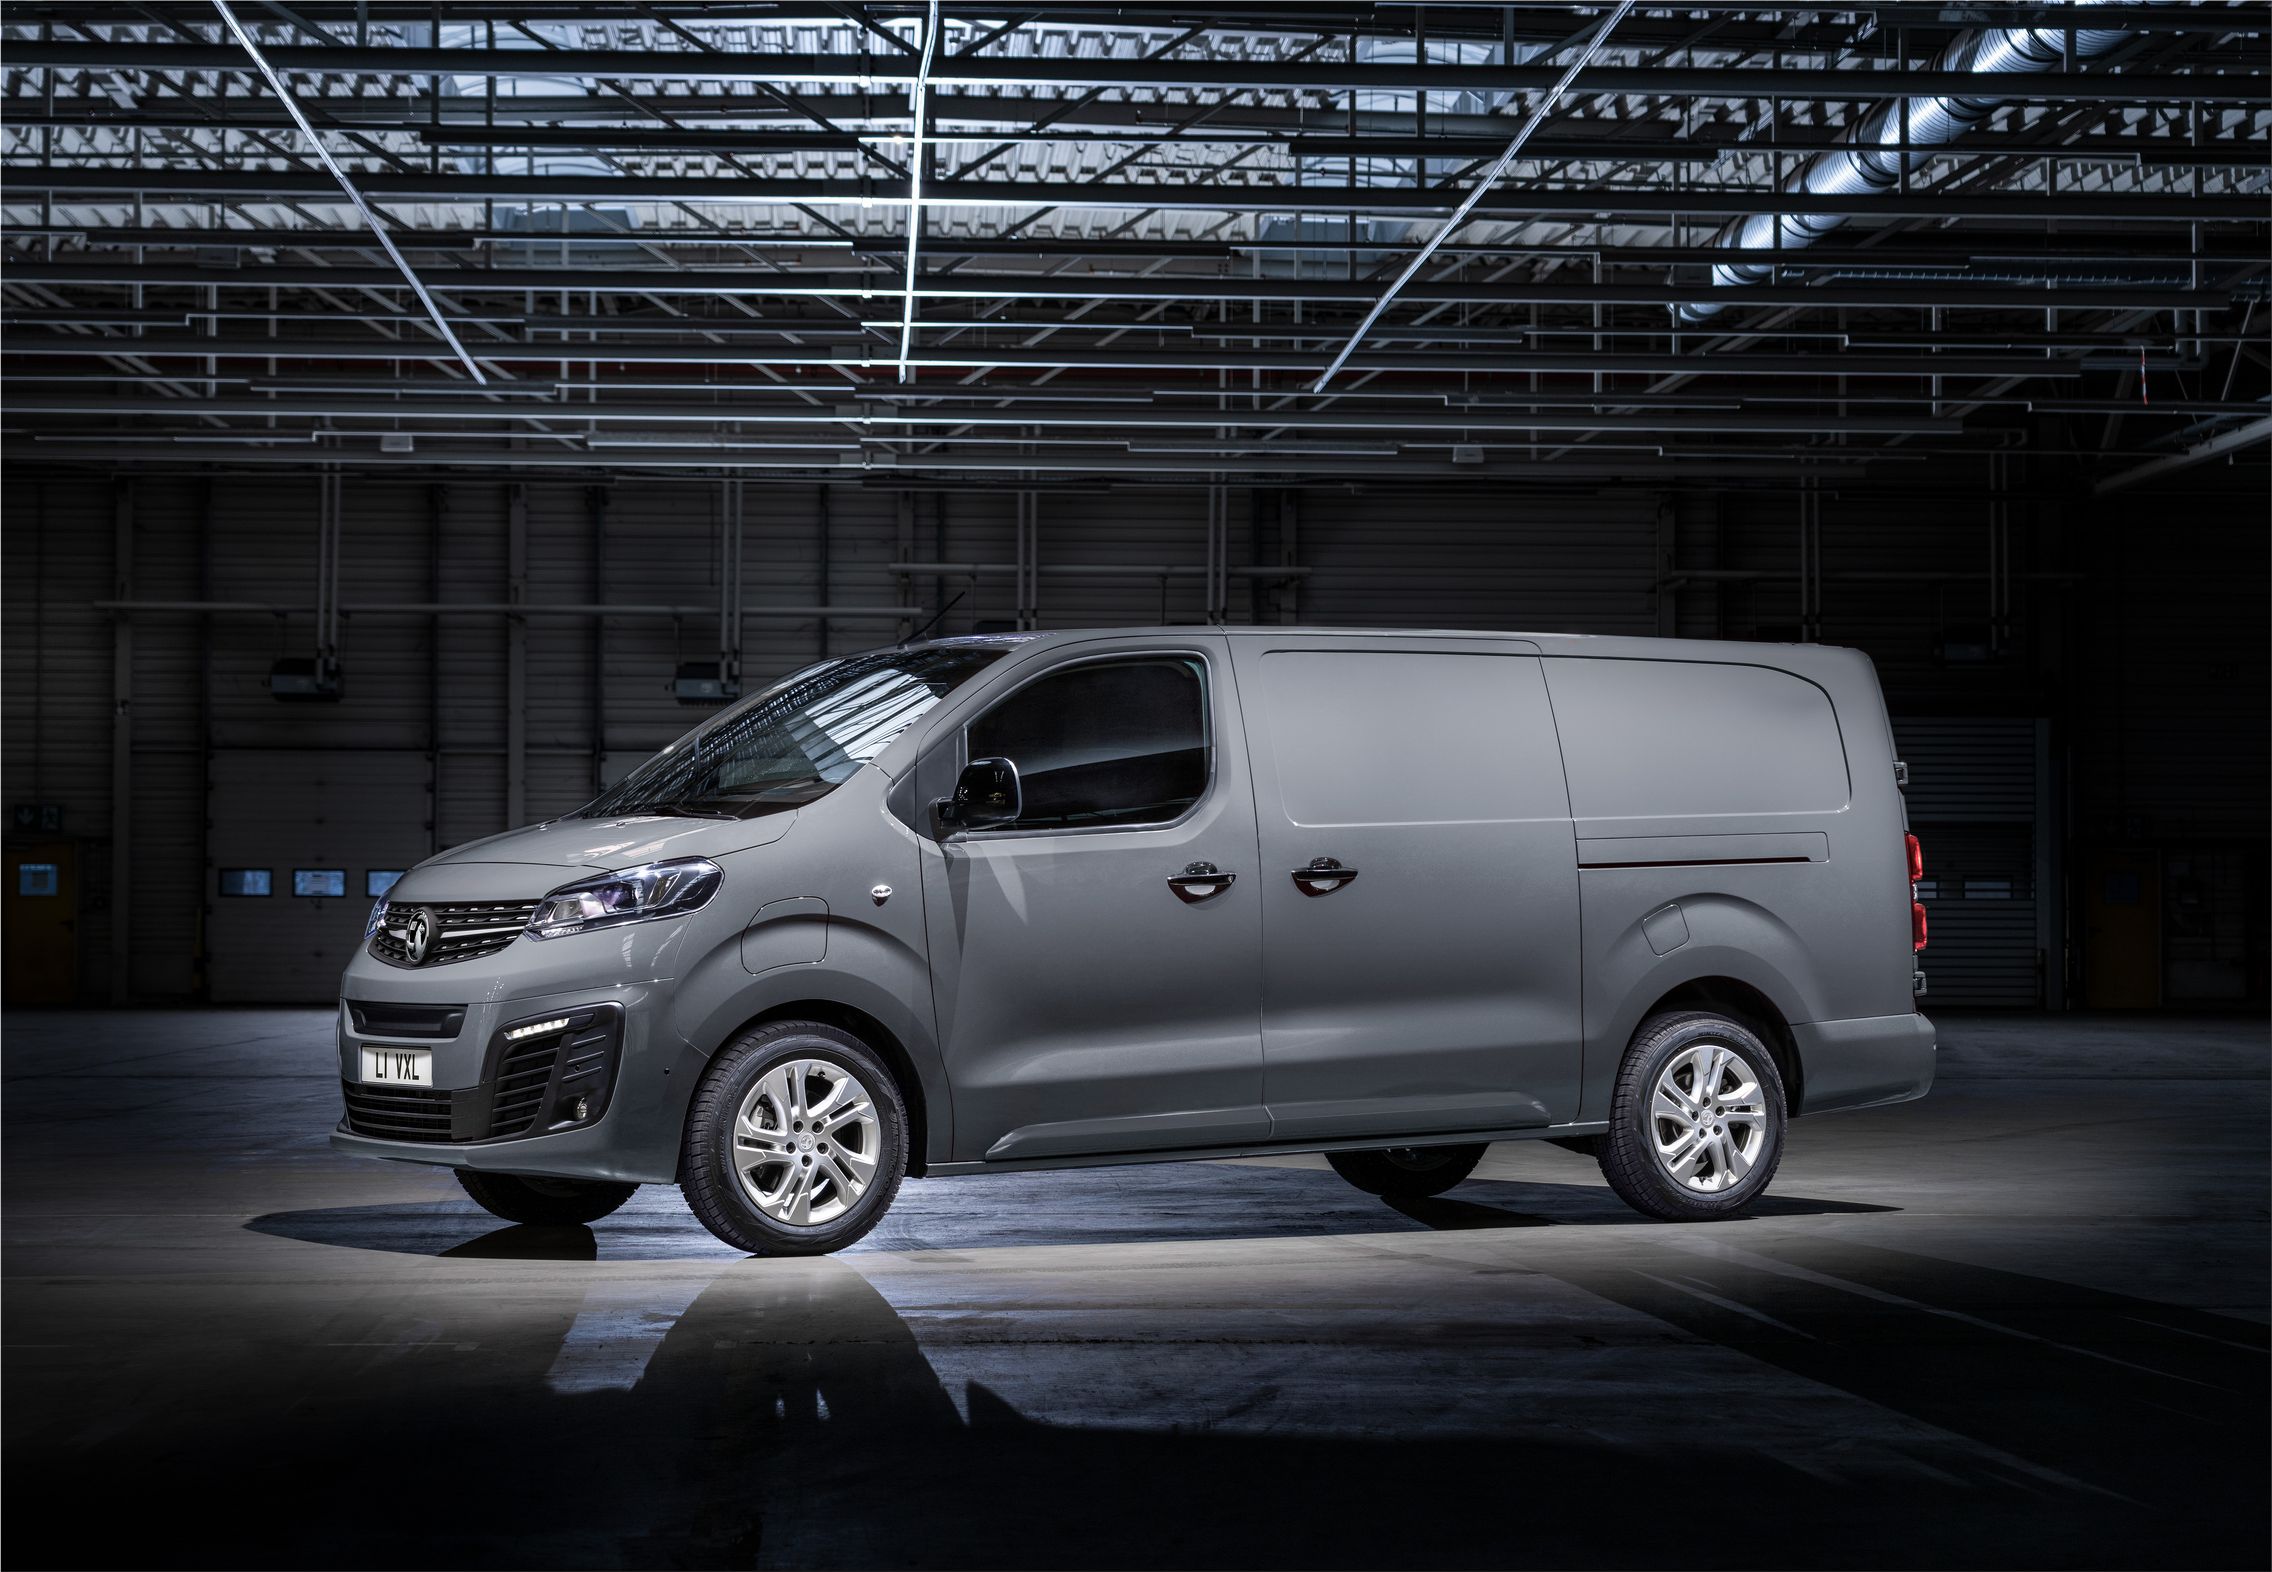 The Opel Vivaro-e electric van with a range of 330 kilometres